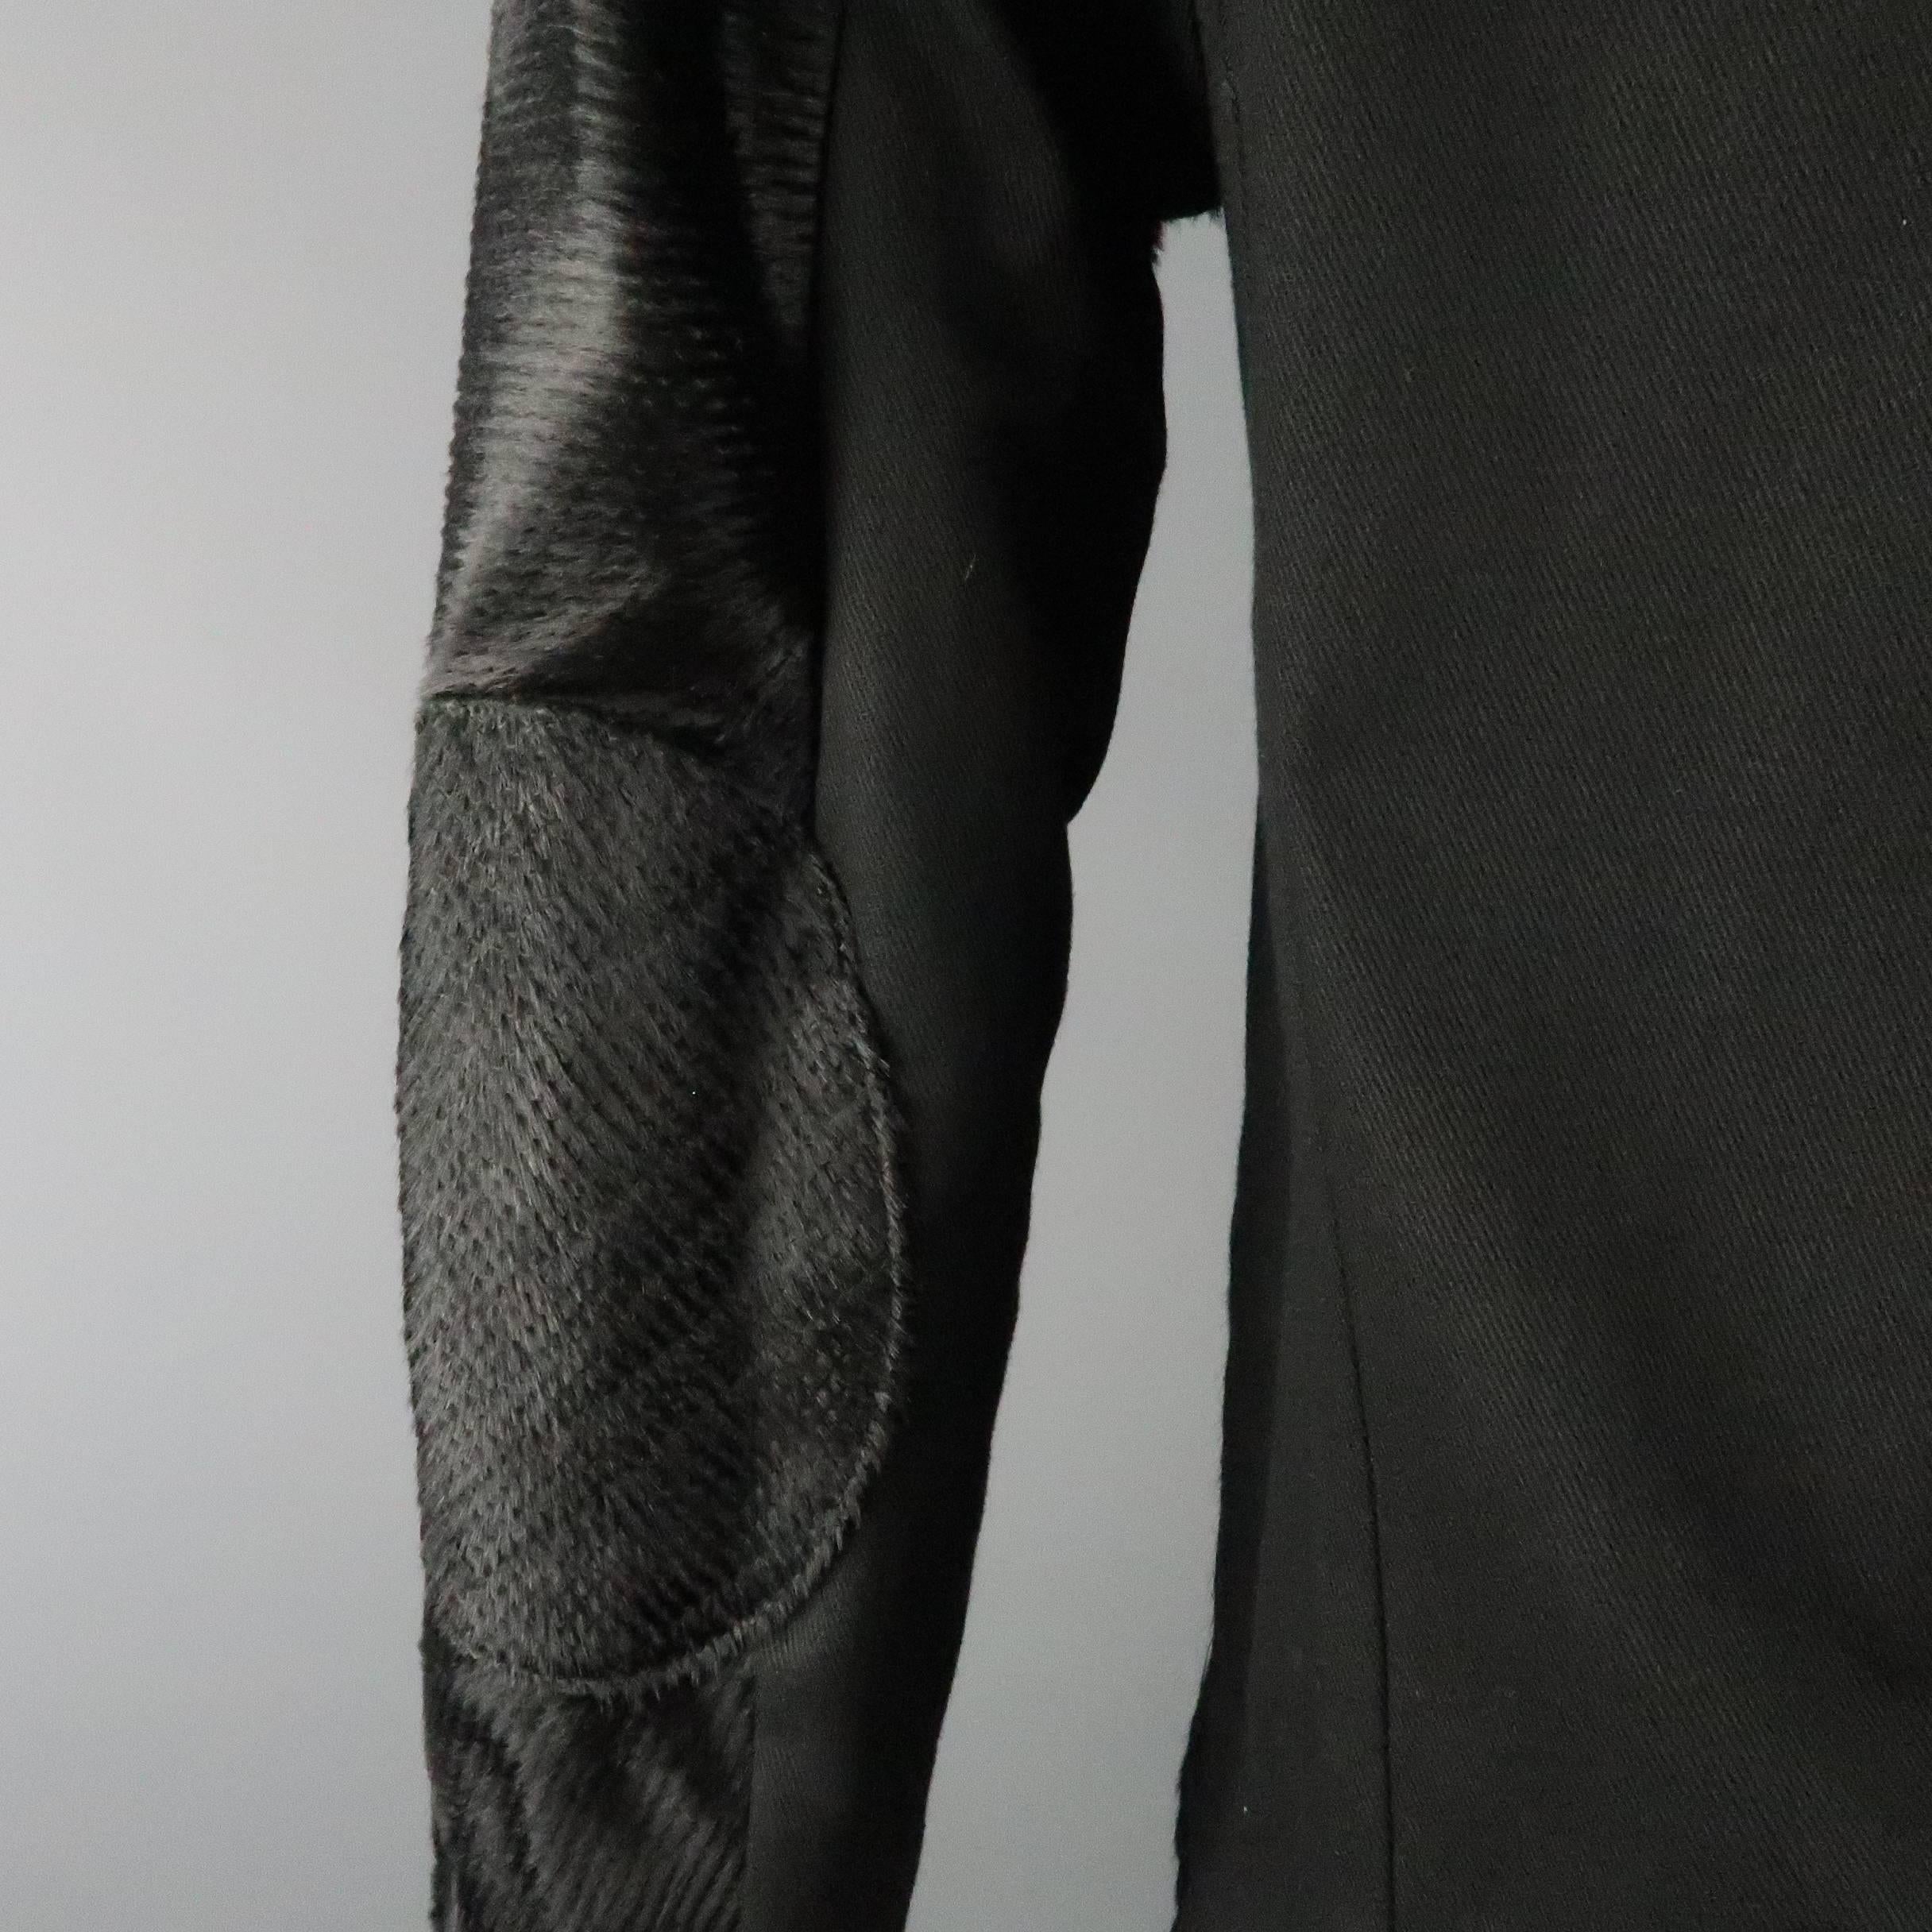 Baja East Jacket - Black Perforated Ponyhair Leather, Motorcycle Coat 2